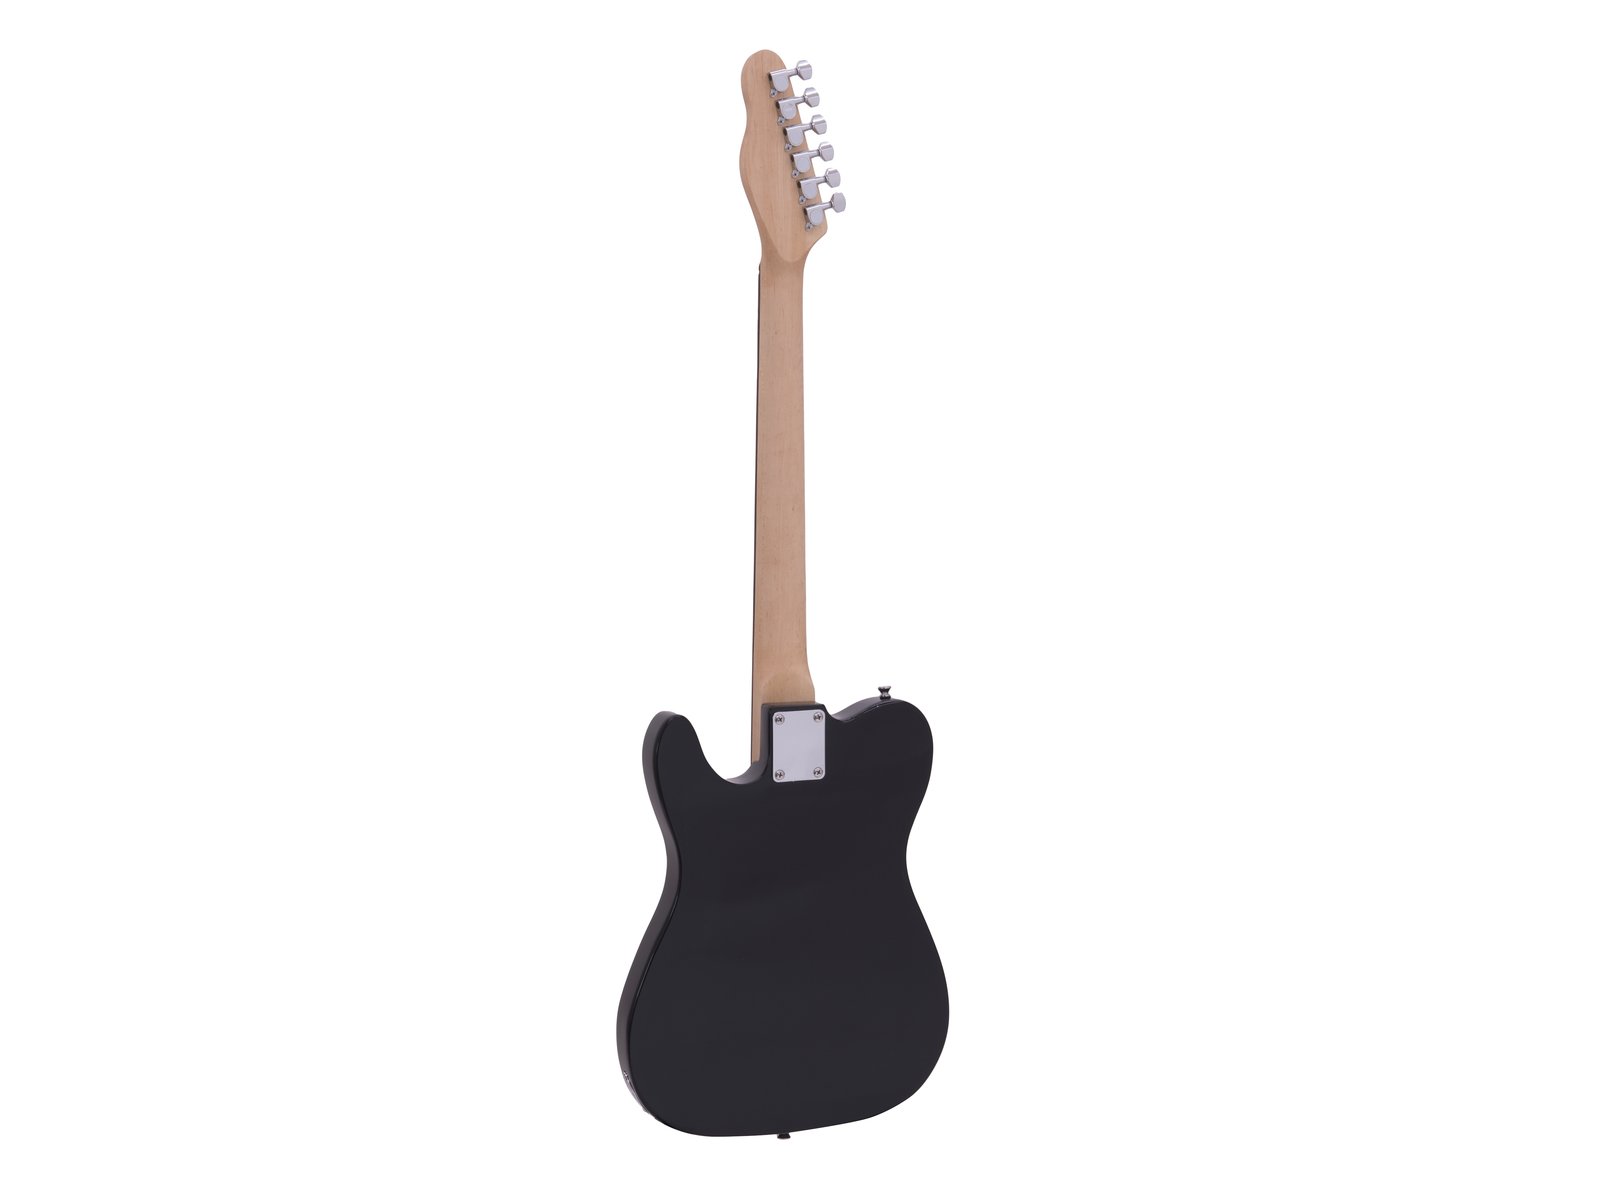 DIMAVERY TL-401 E-Guitar, black